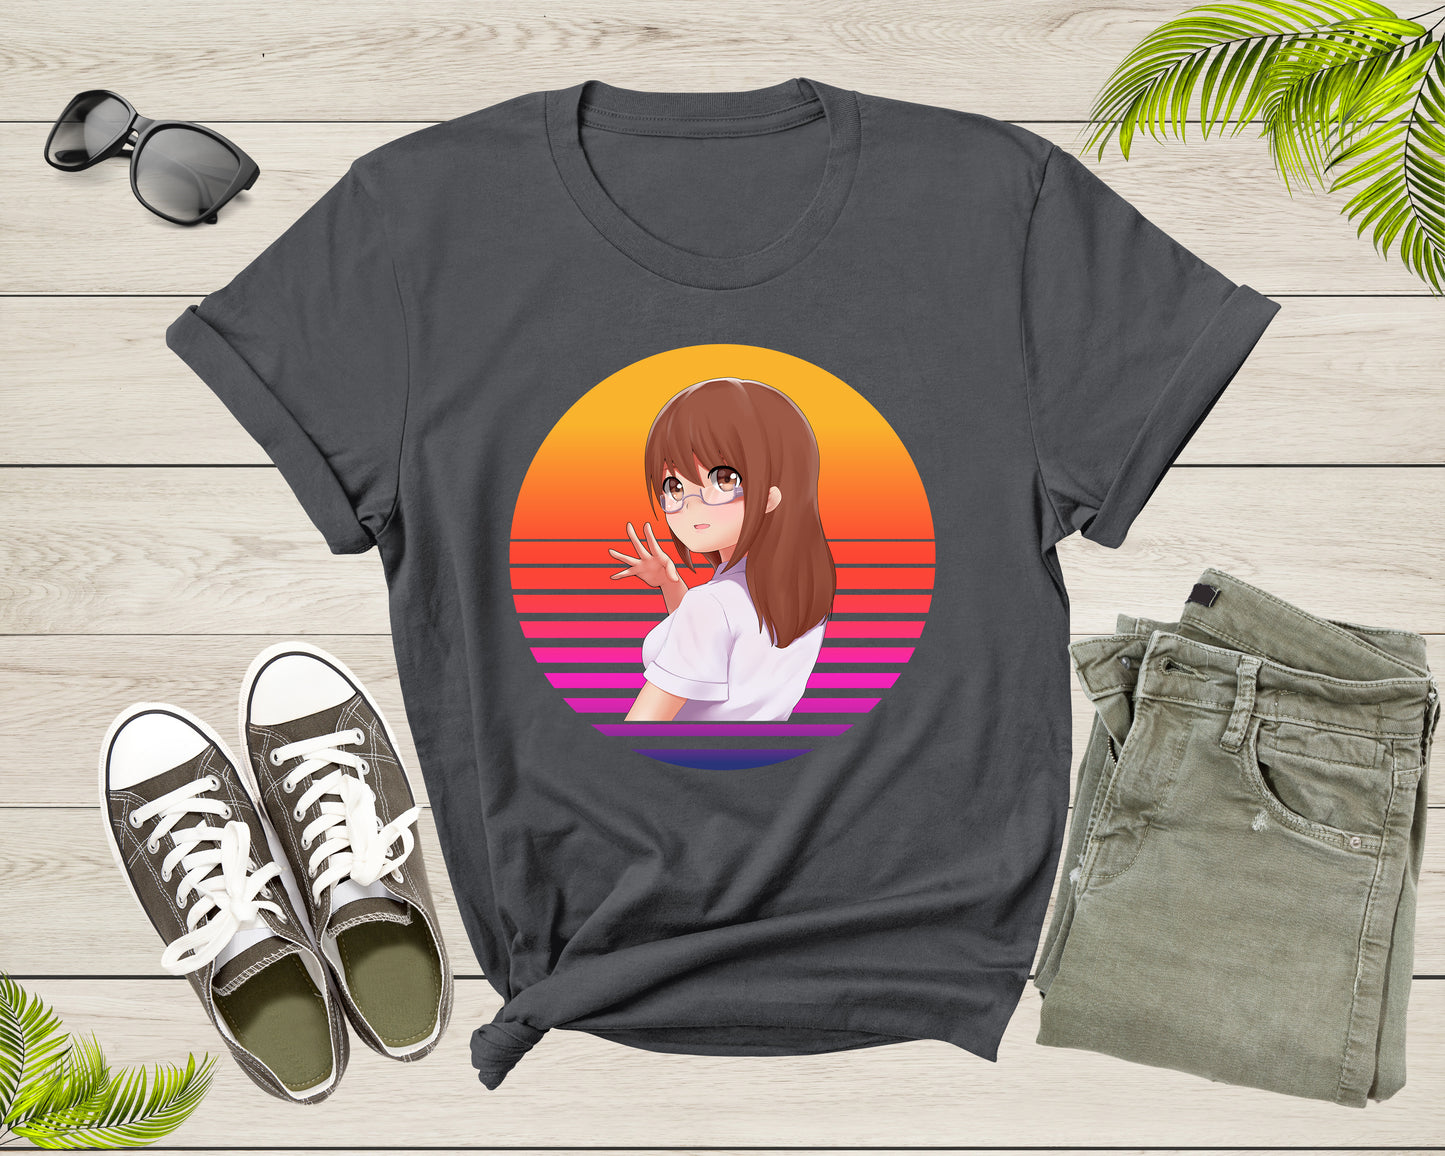 Beautiful Japanese Retro Anime Girl Manga Design T-shirt For Men Women Cute Anime Shirt For Kids Teens Boys Girls Teenager Anime Gift Tshirt